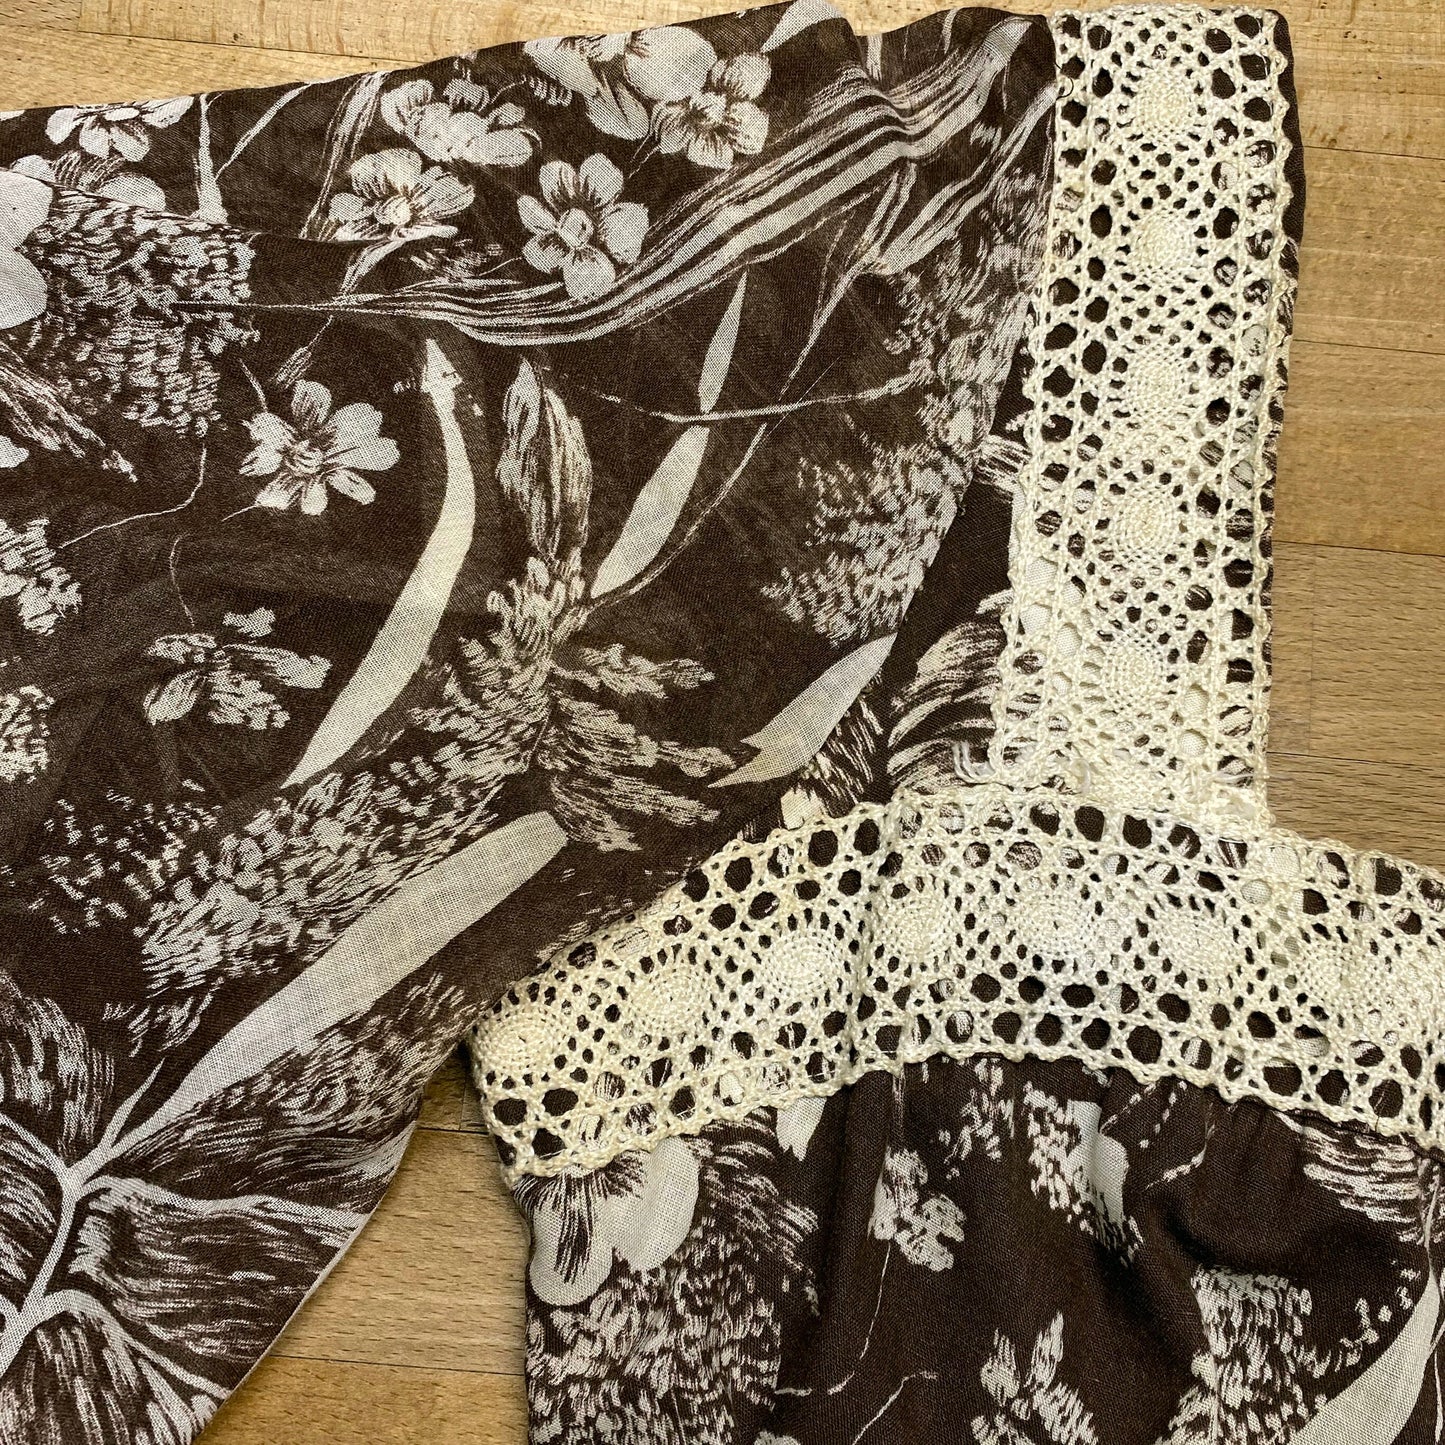 Small 60s 70s Boho Brown Floral Flutter Sleeve Maxi Dress | Vintage A-Line Crochet Trim Hippie Summer Sundress